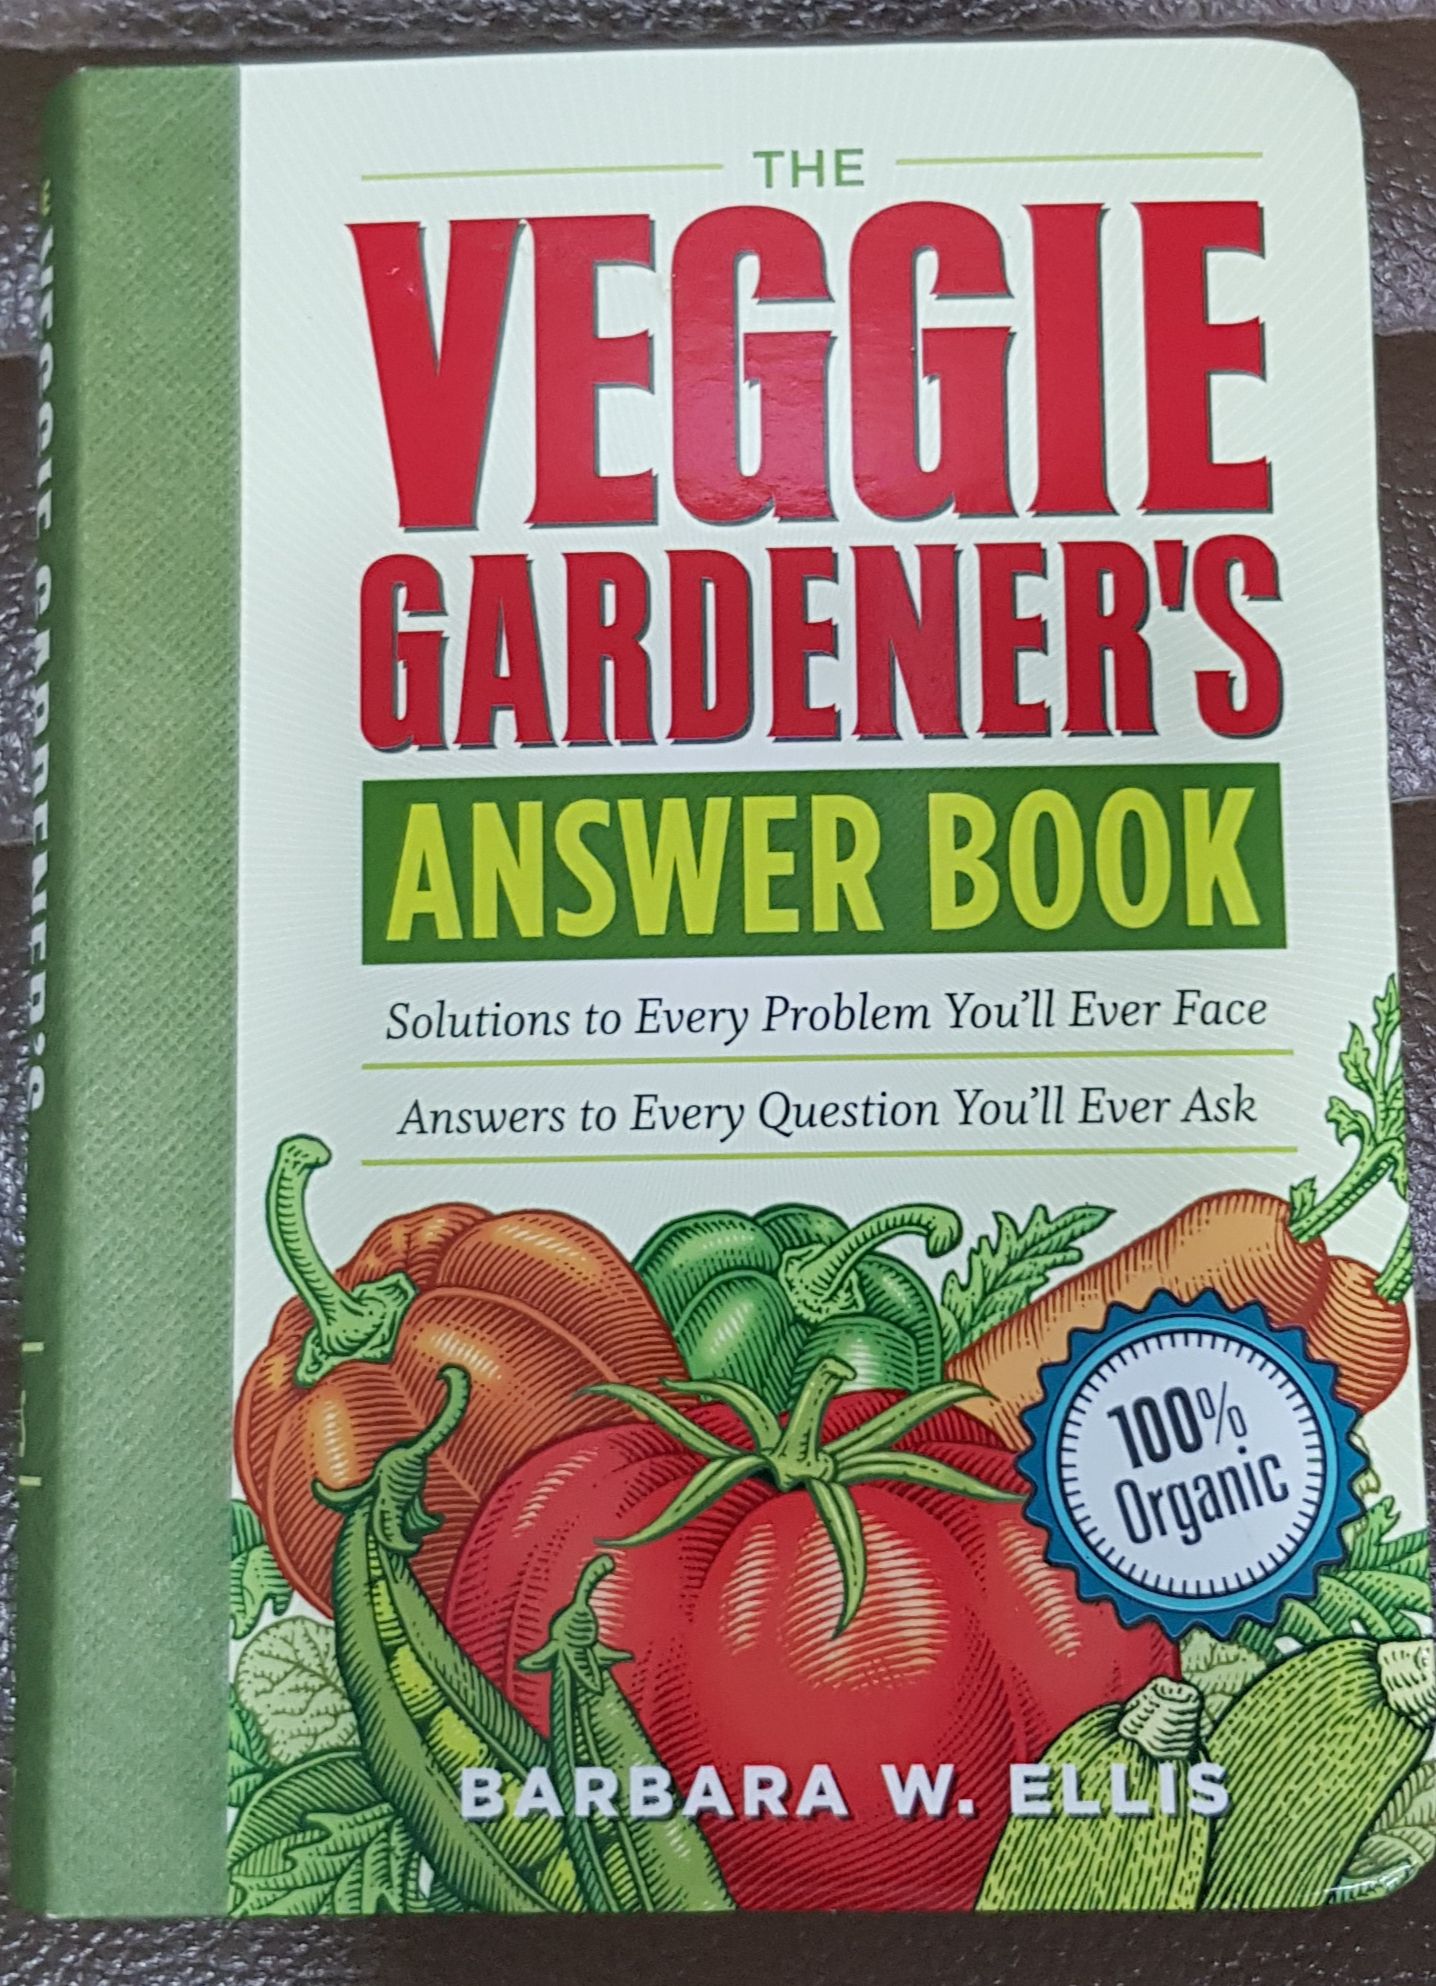 Veggie gardener's answer book